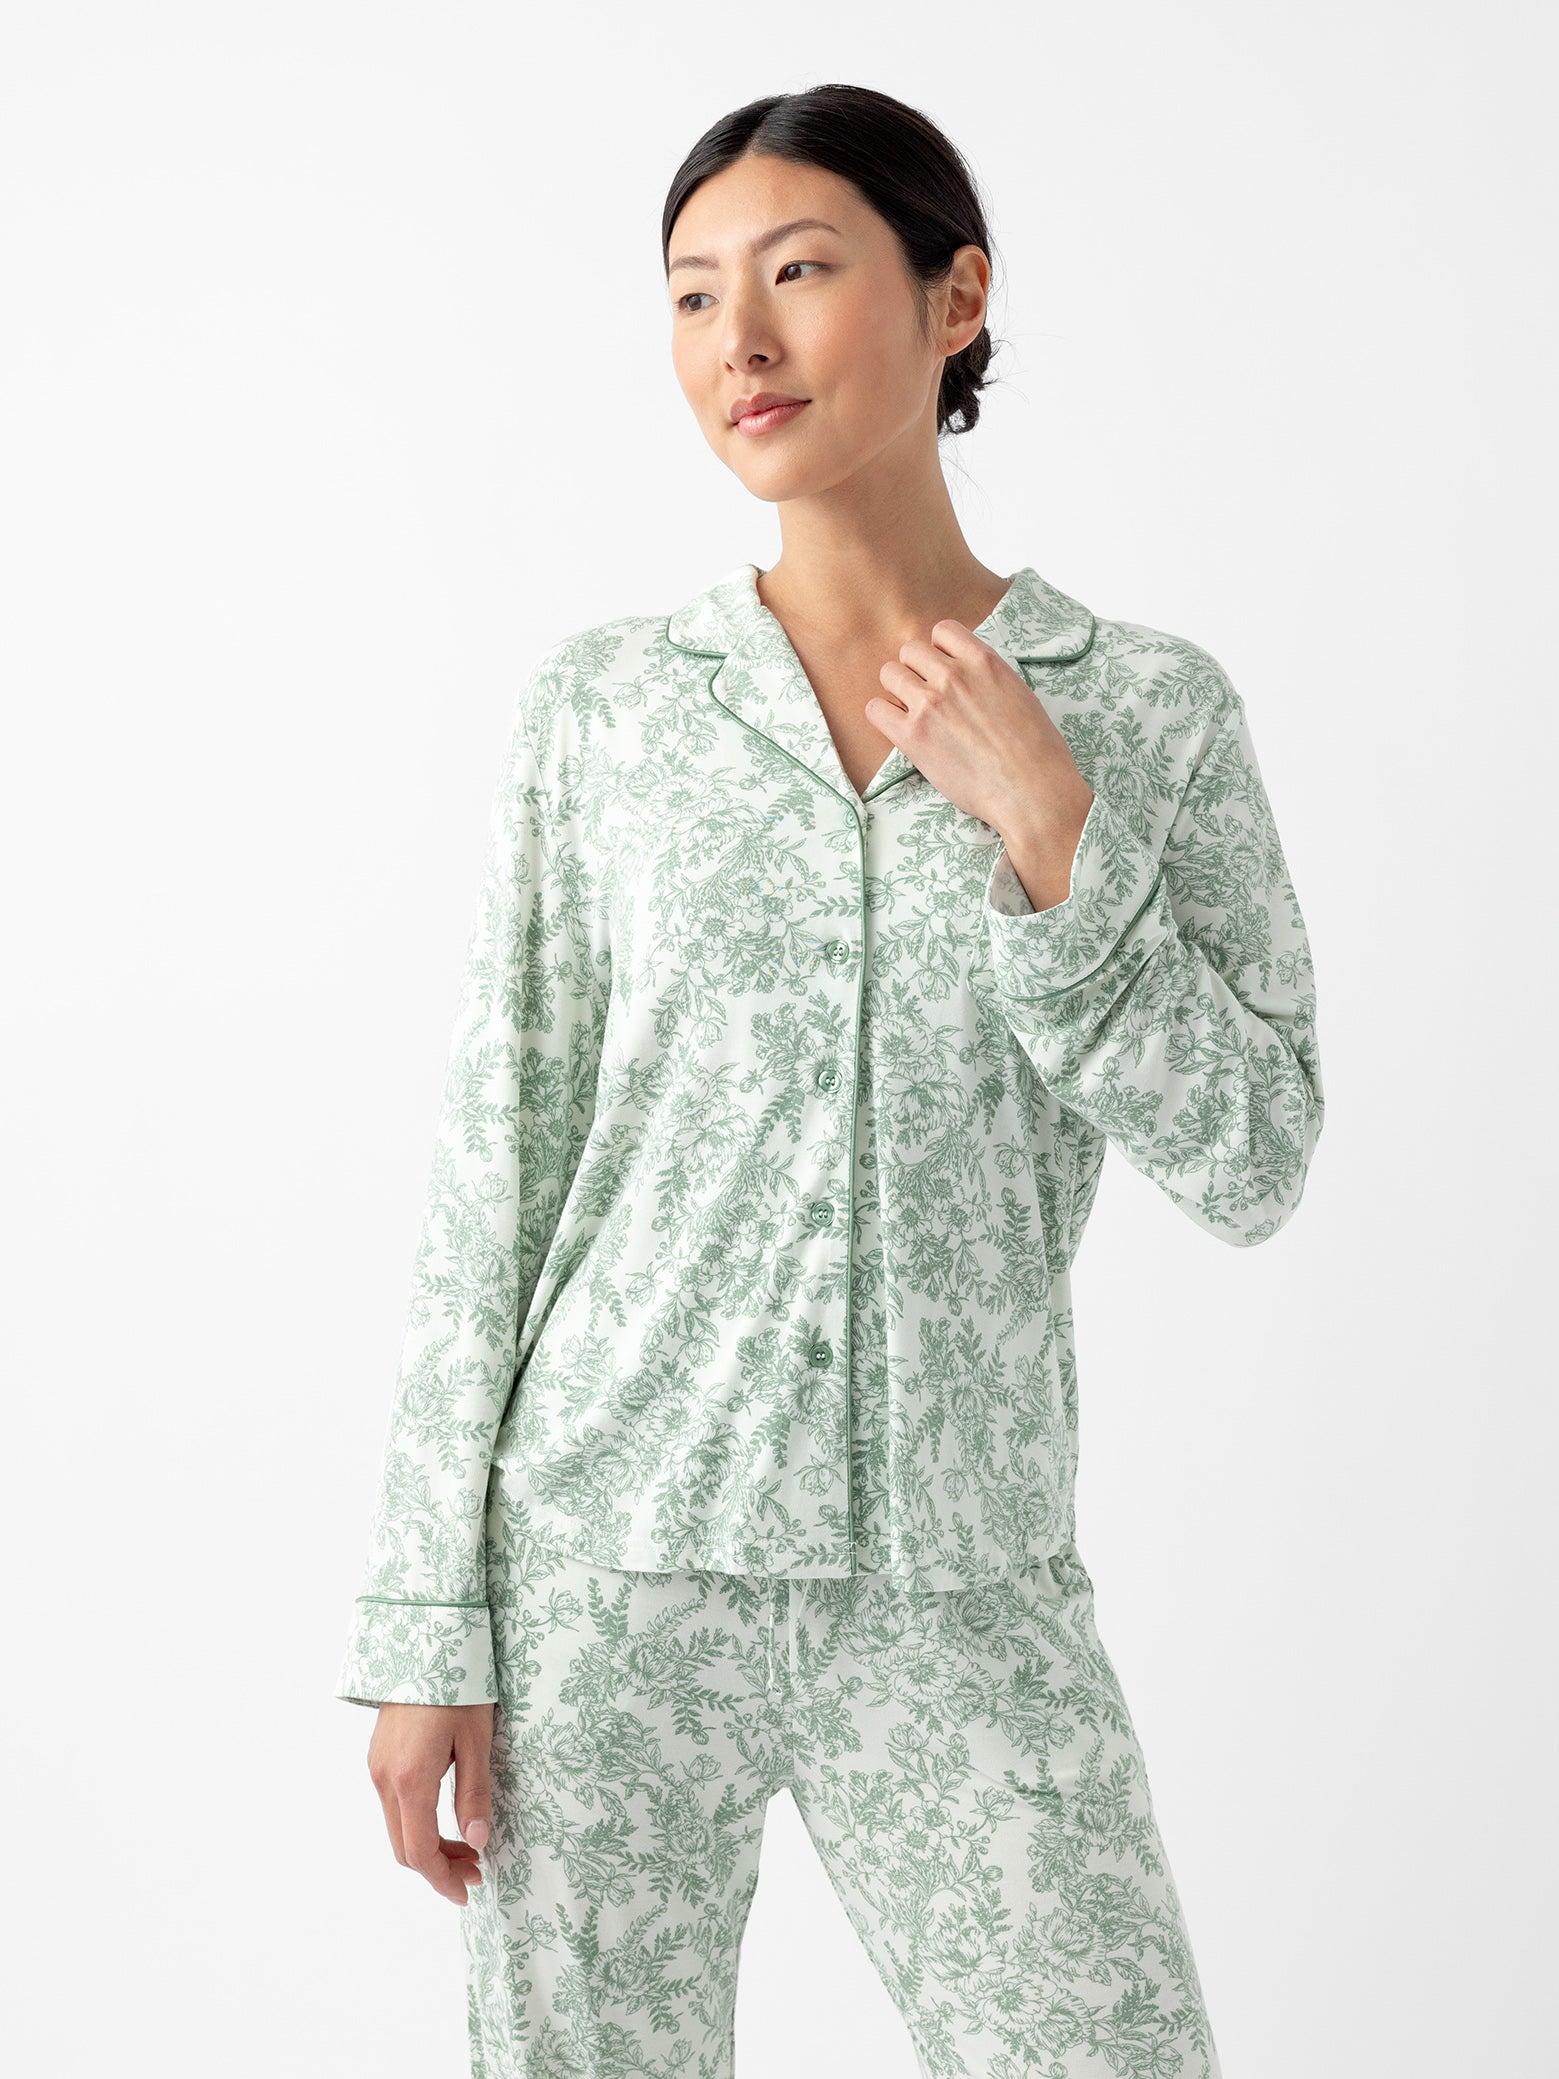 Woman wearing celadon toile pajama shirt with white background 